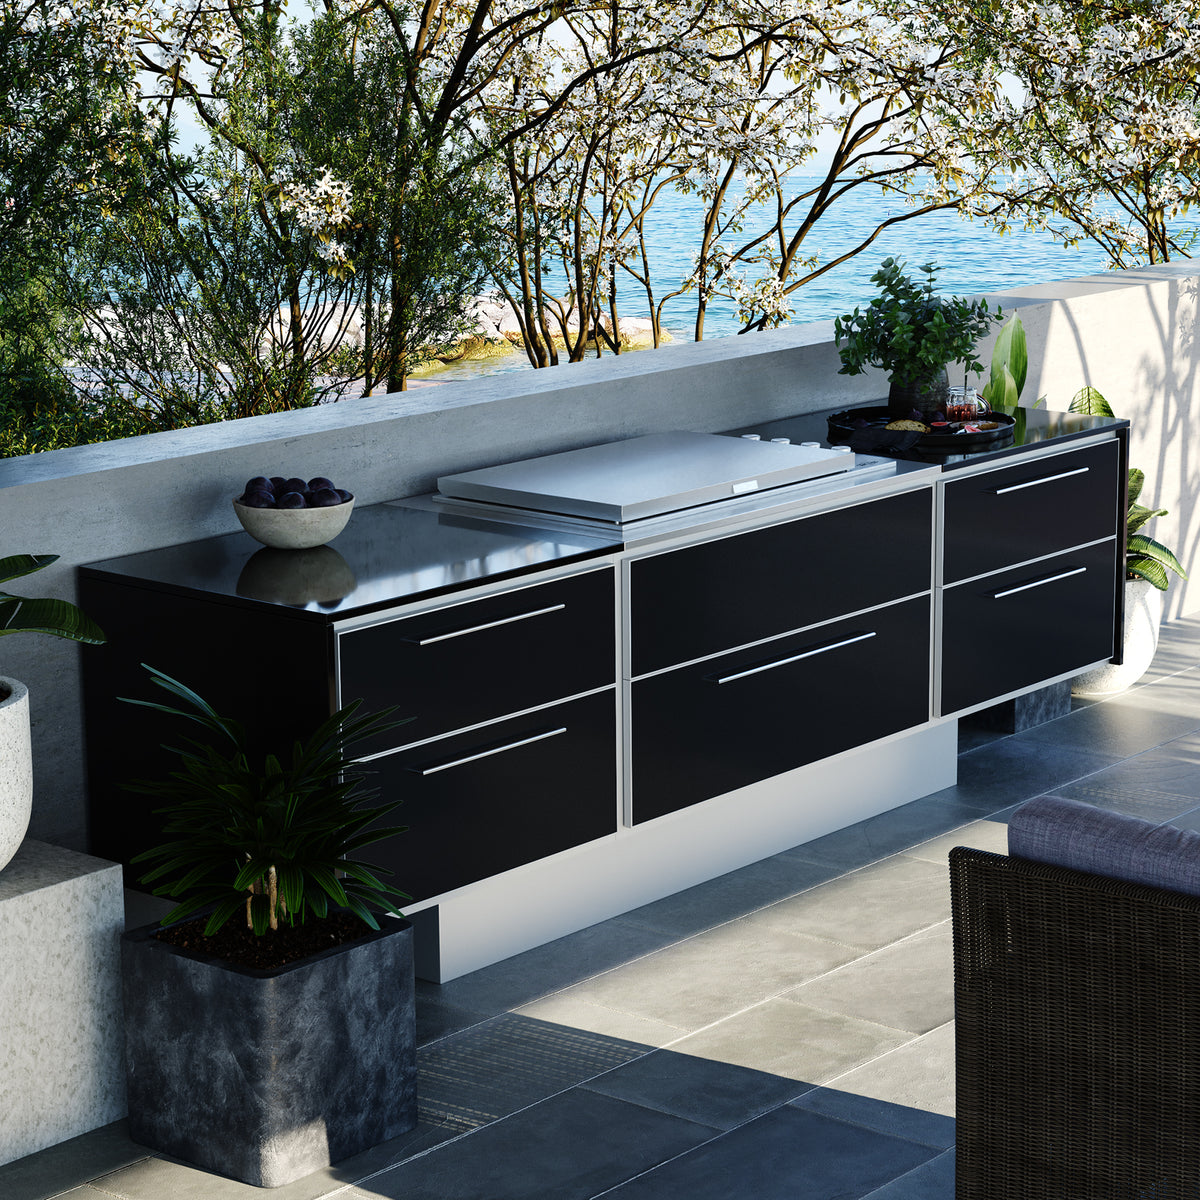 Profresco Proline Flat Lid 6 Burner Barbecue Aero Outdoor Kitchen- Black